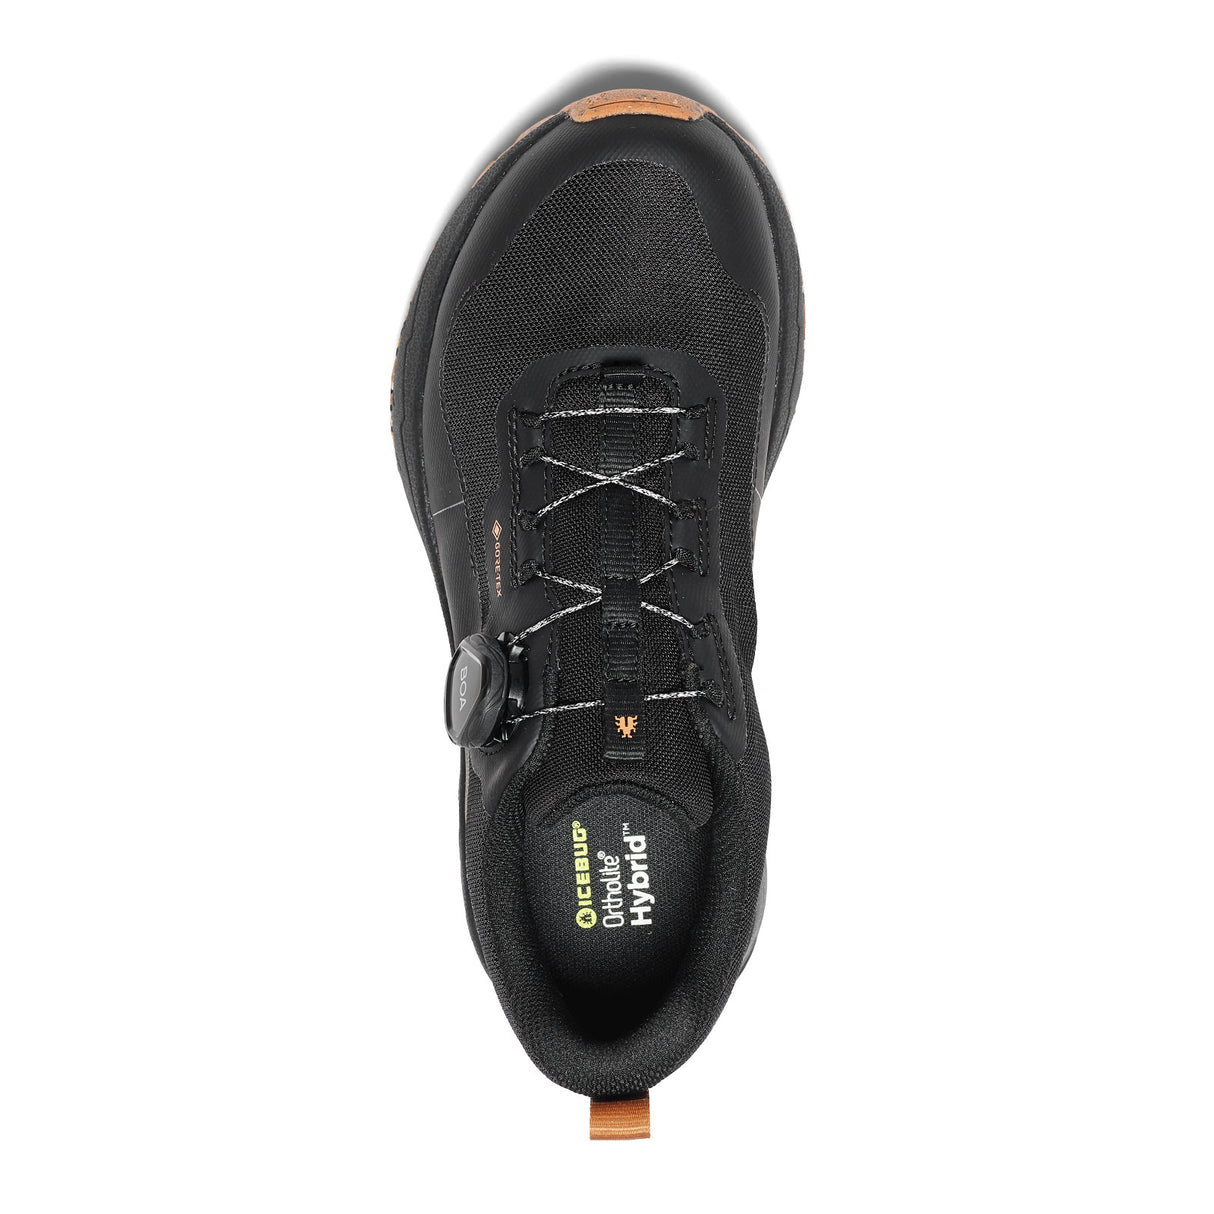 Icebug Haze RB9X GTX Trail Shoe (Men) - Black/Maple Athetlic - Running - Trail - The Heel Shoe Fitters